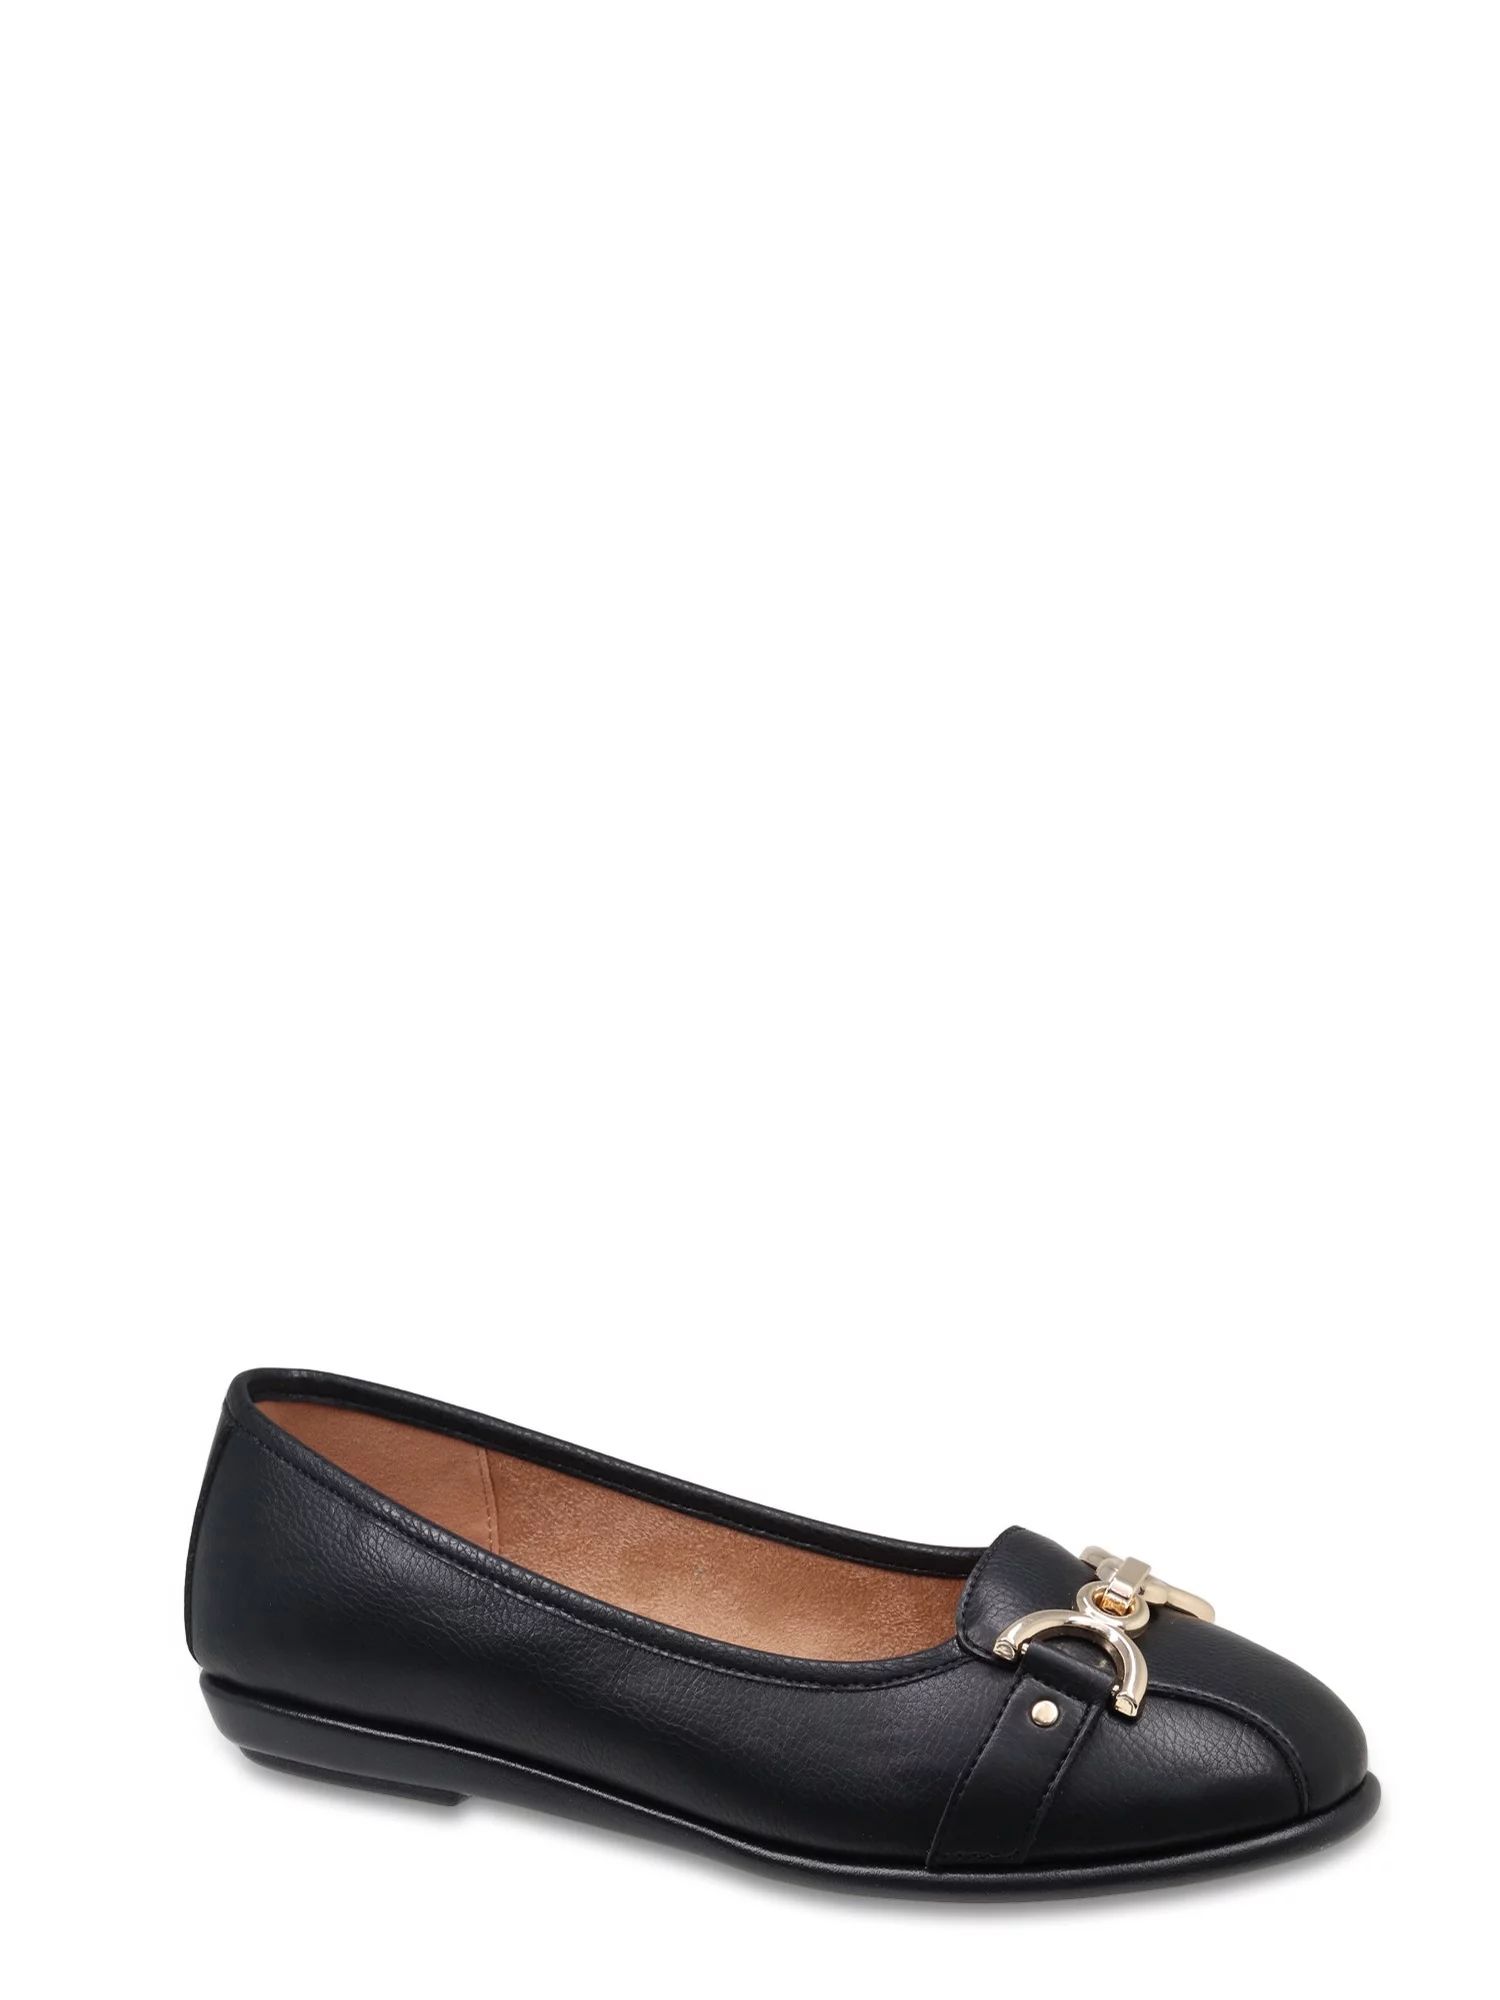 Aerosoles Comfortable Women's Ballet Shoes in Black Faux Leather - Wide Width Available | Walmart (US)